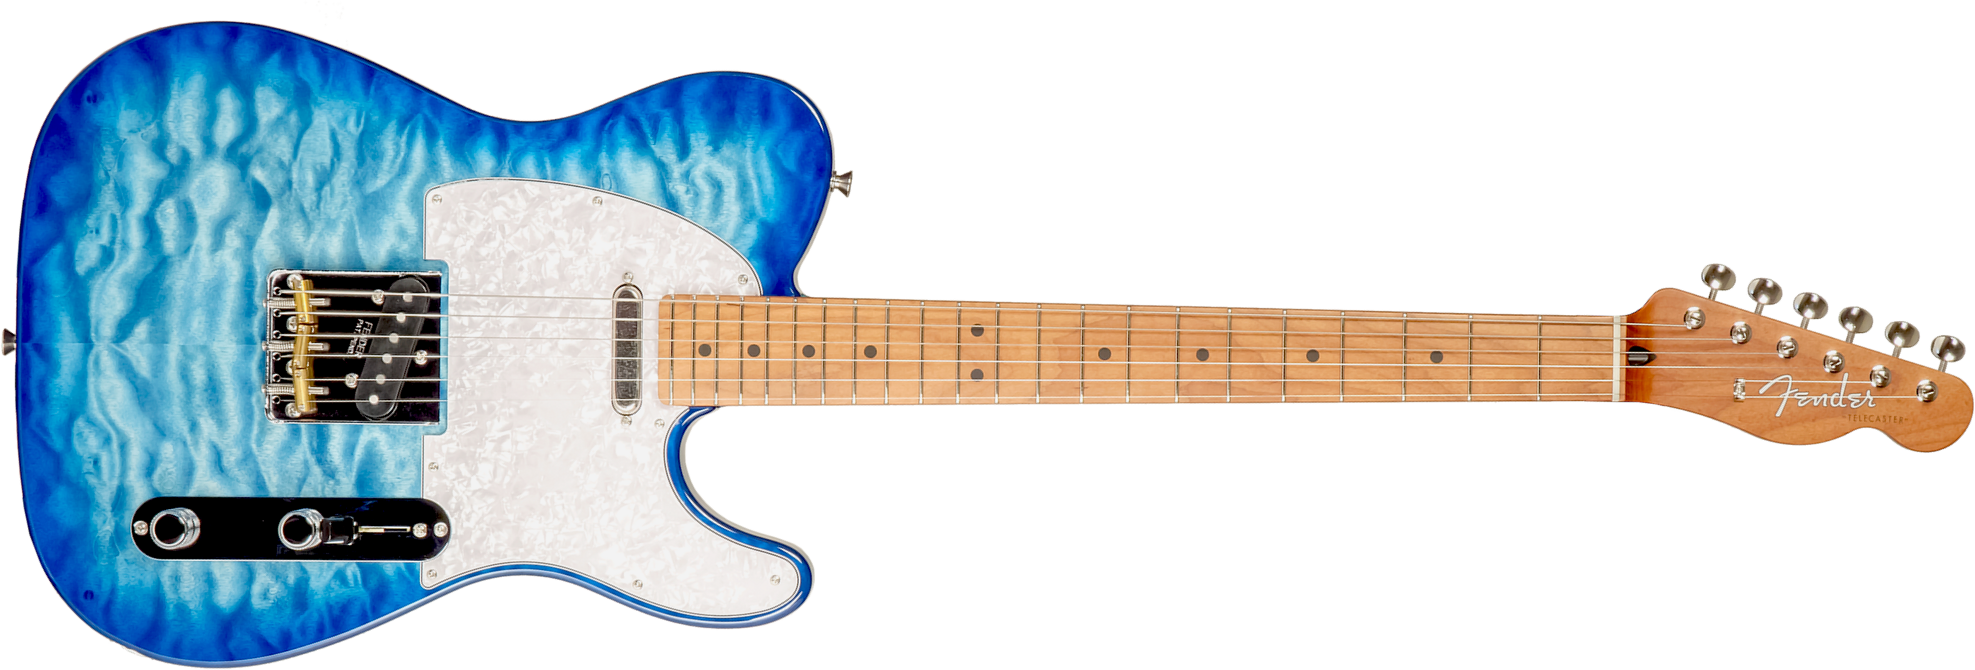 Fender Tele Hybrid Ii Jap 2s Ht Mn - Aqua Blue - Tel shape electric guitar - Main picture